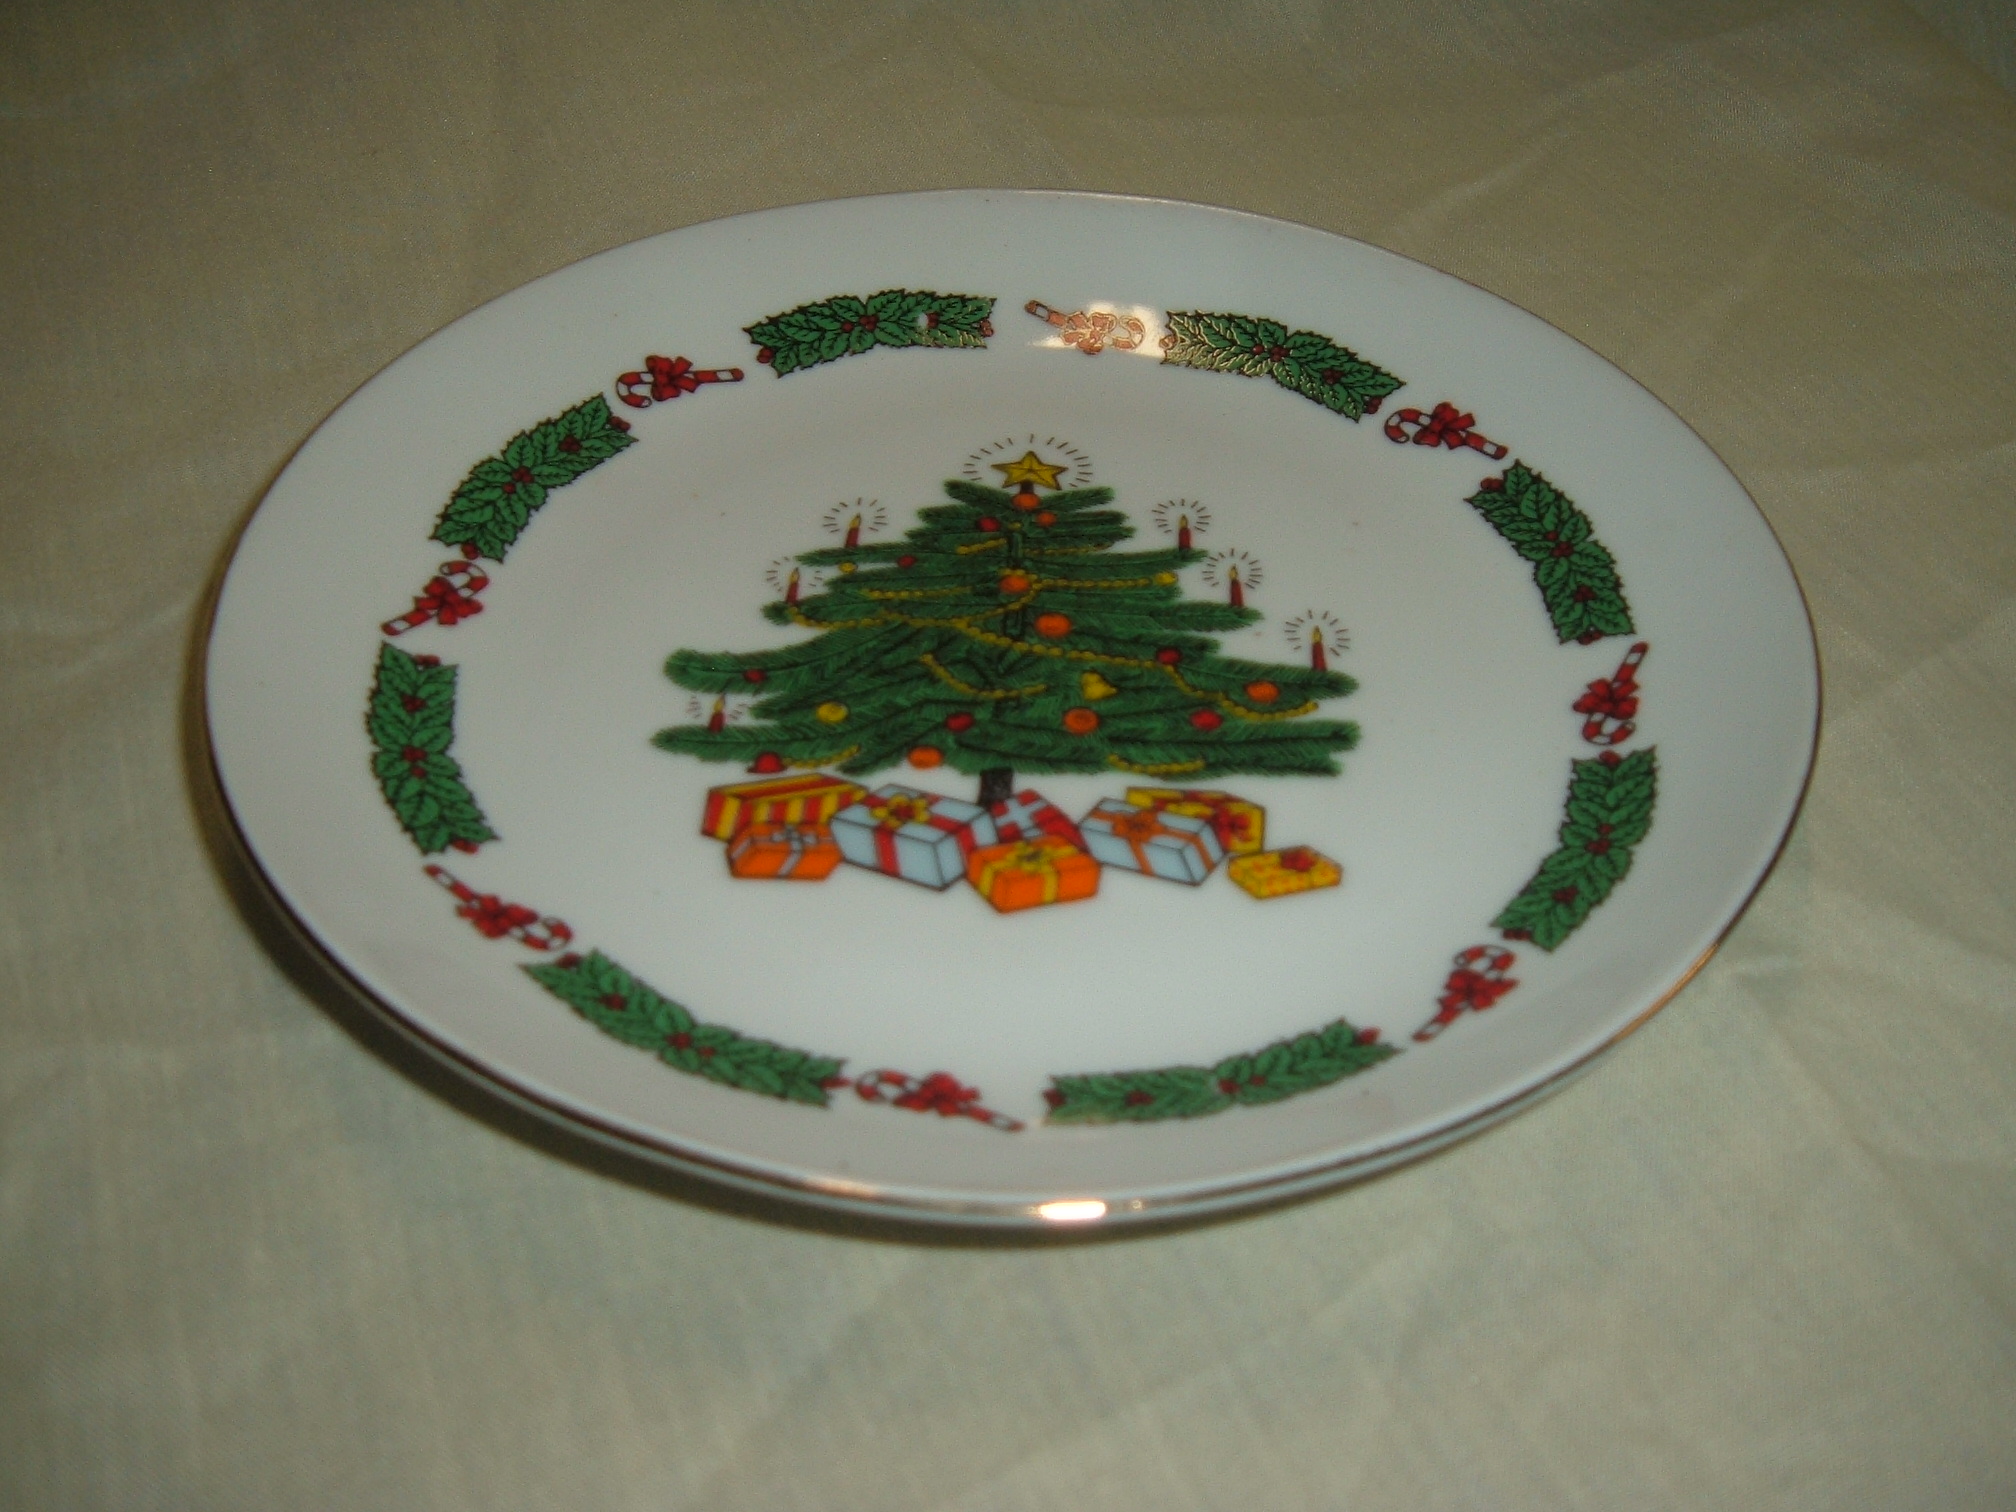 White Christmas Tree Display Plate